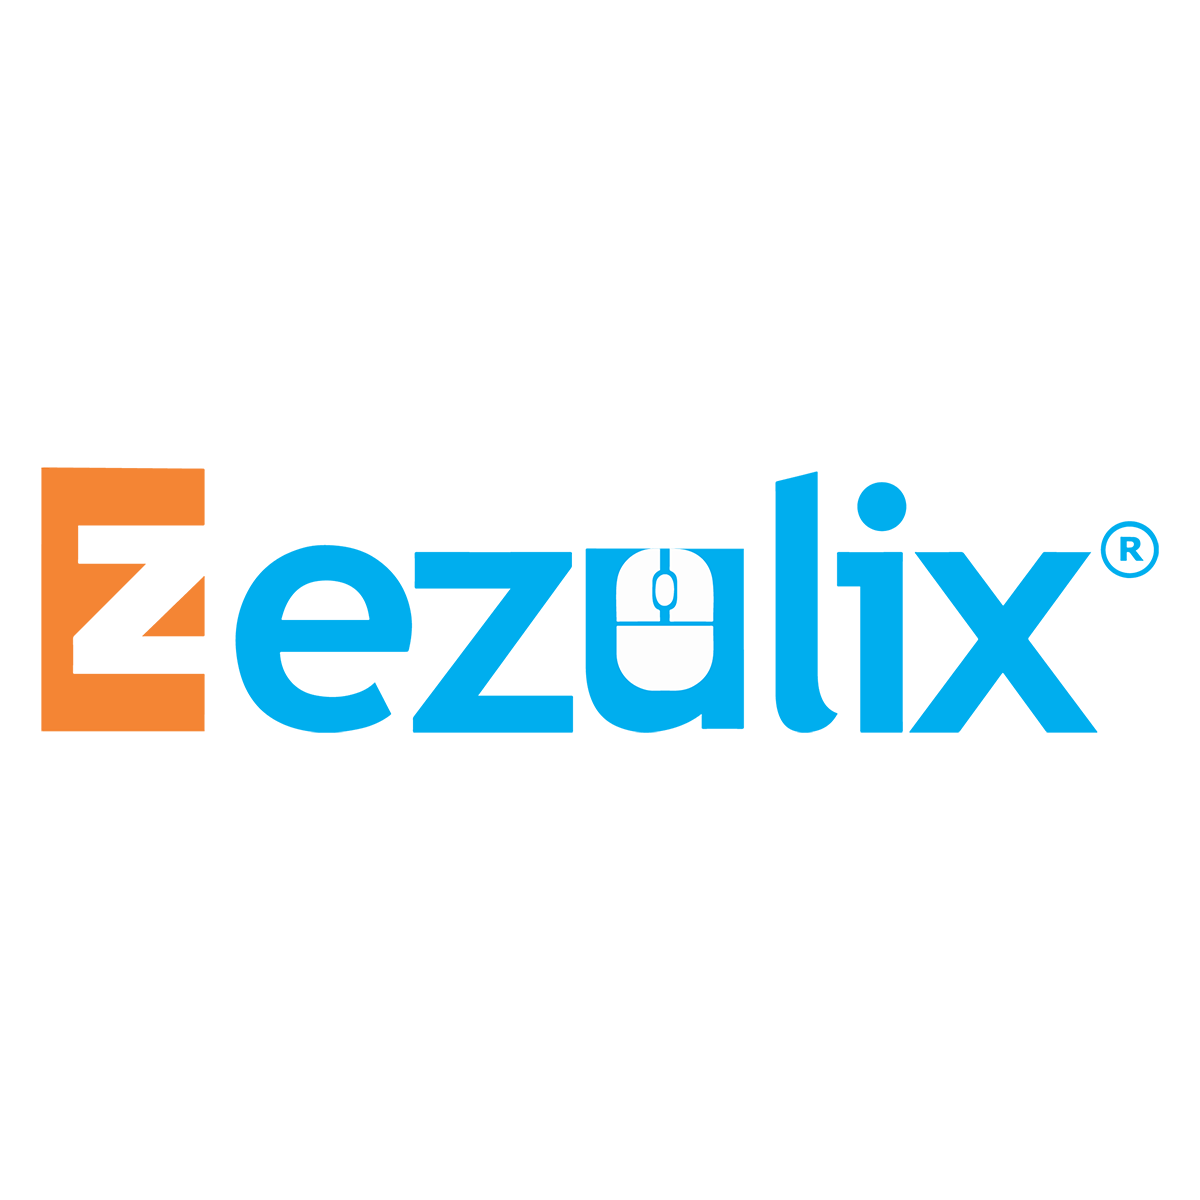 Ezulix Software|Legal Services|Professional Services